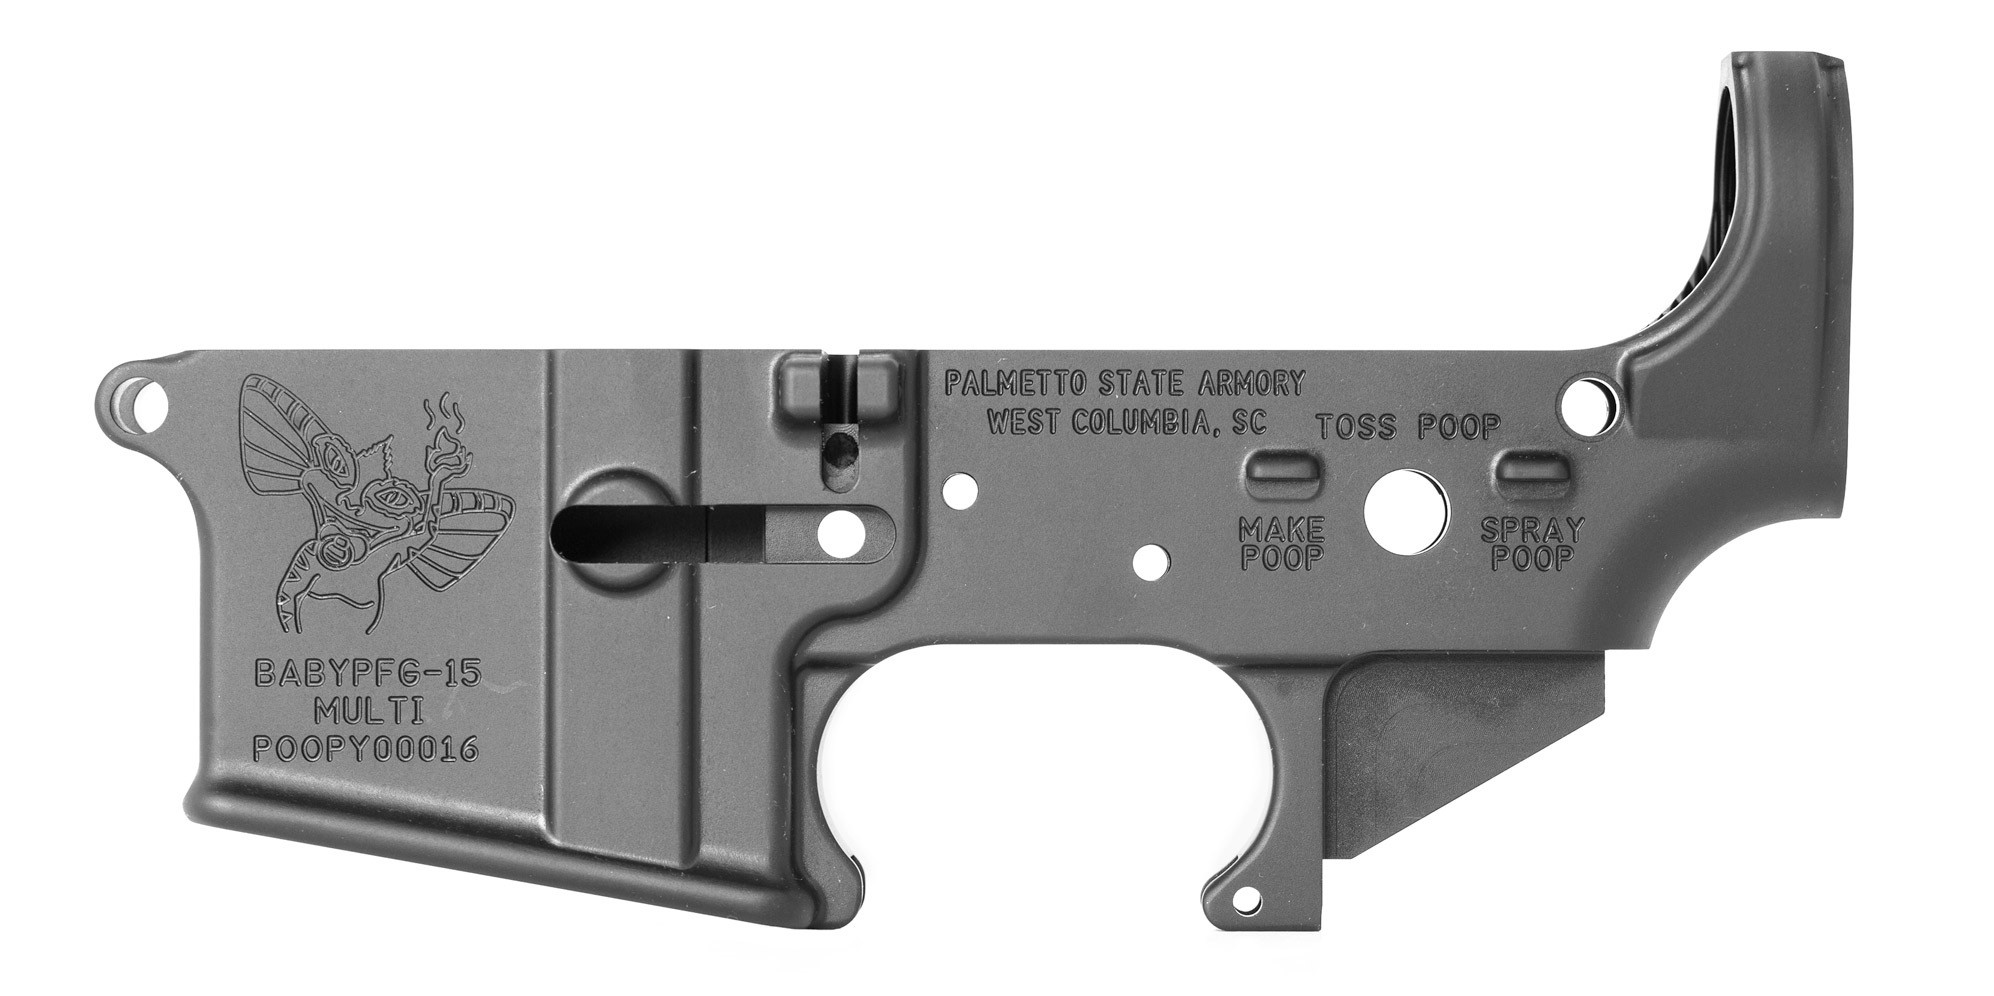 PSA AR-15 "BABYPFG-15" Stripped Lower Receiver